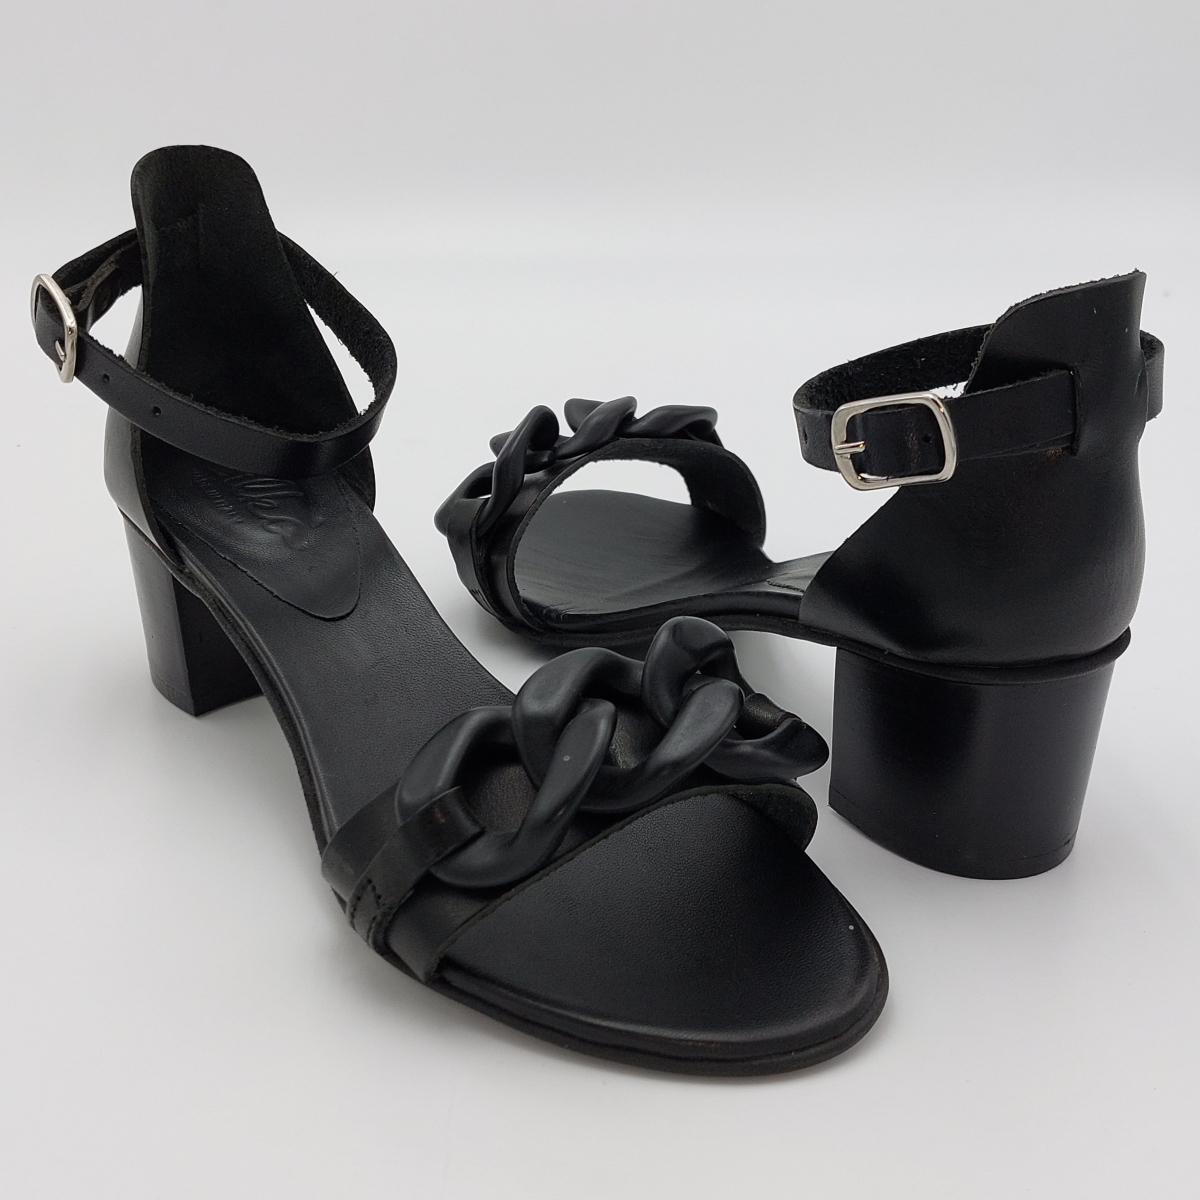 Silkò -Sandalo nero tacco 5 cm